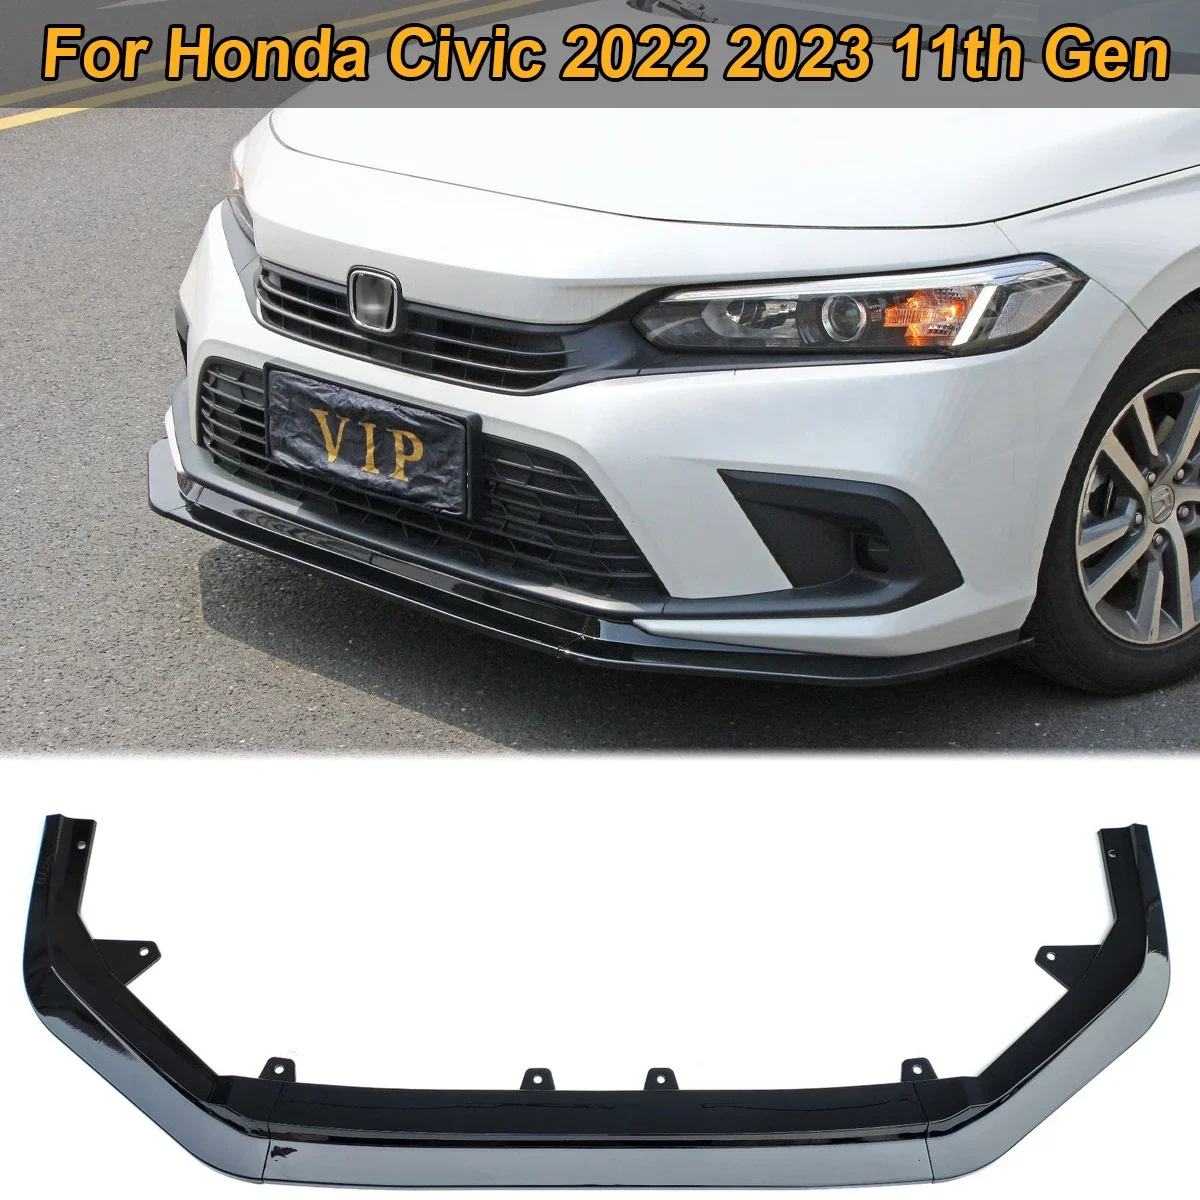 

For Honda Civic 2022 2023 11th Gen Front Bumper Lip Spoiler Splitter Diffuser Guards Body Kit Cover Car Tuning Accessories